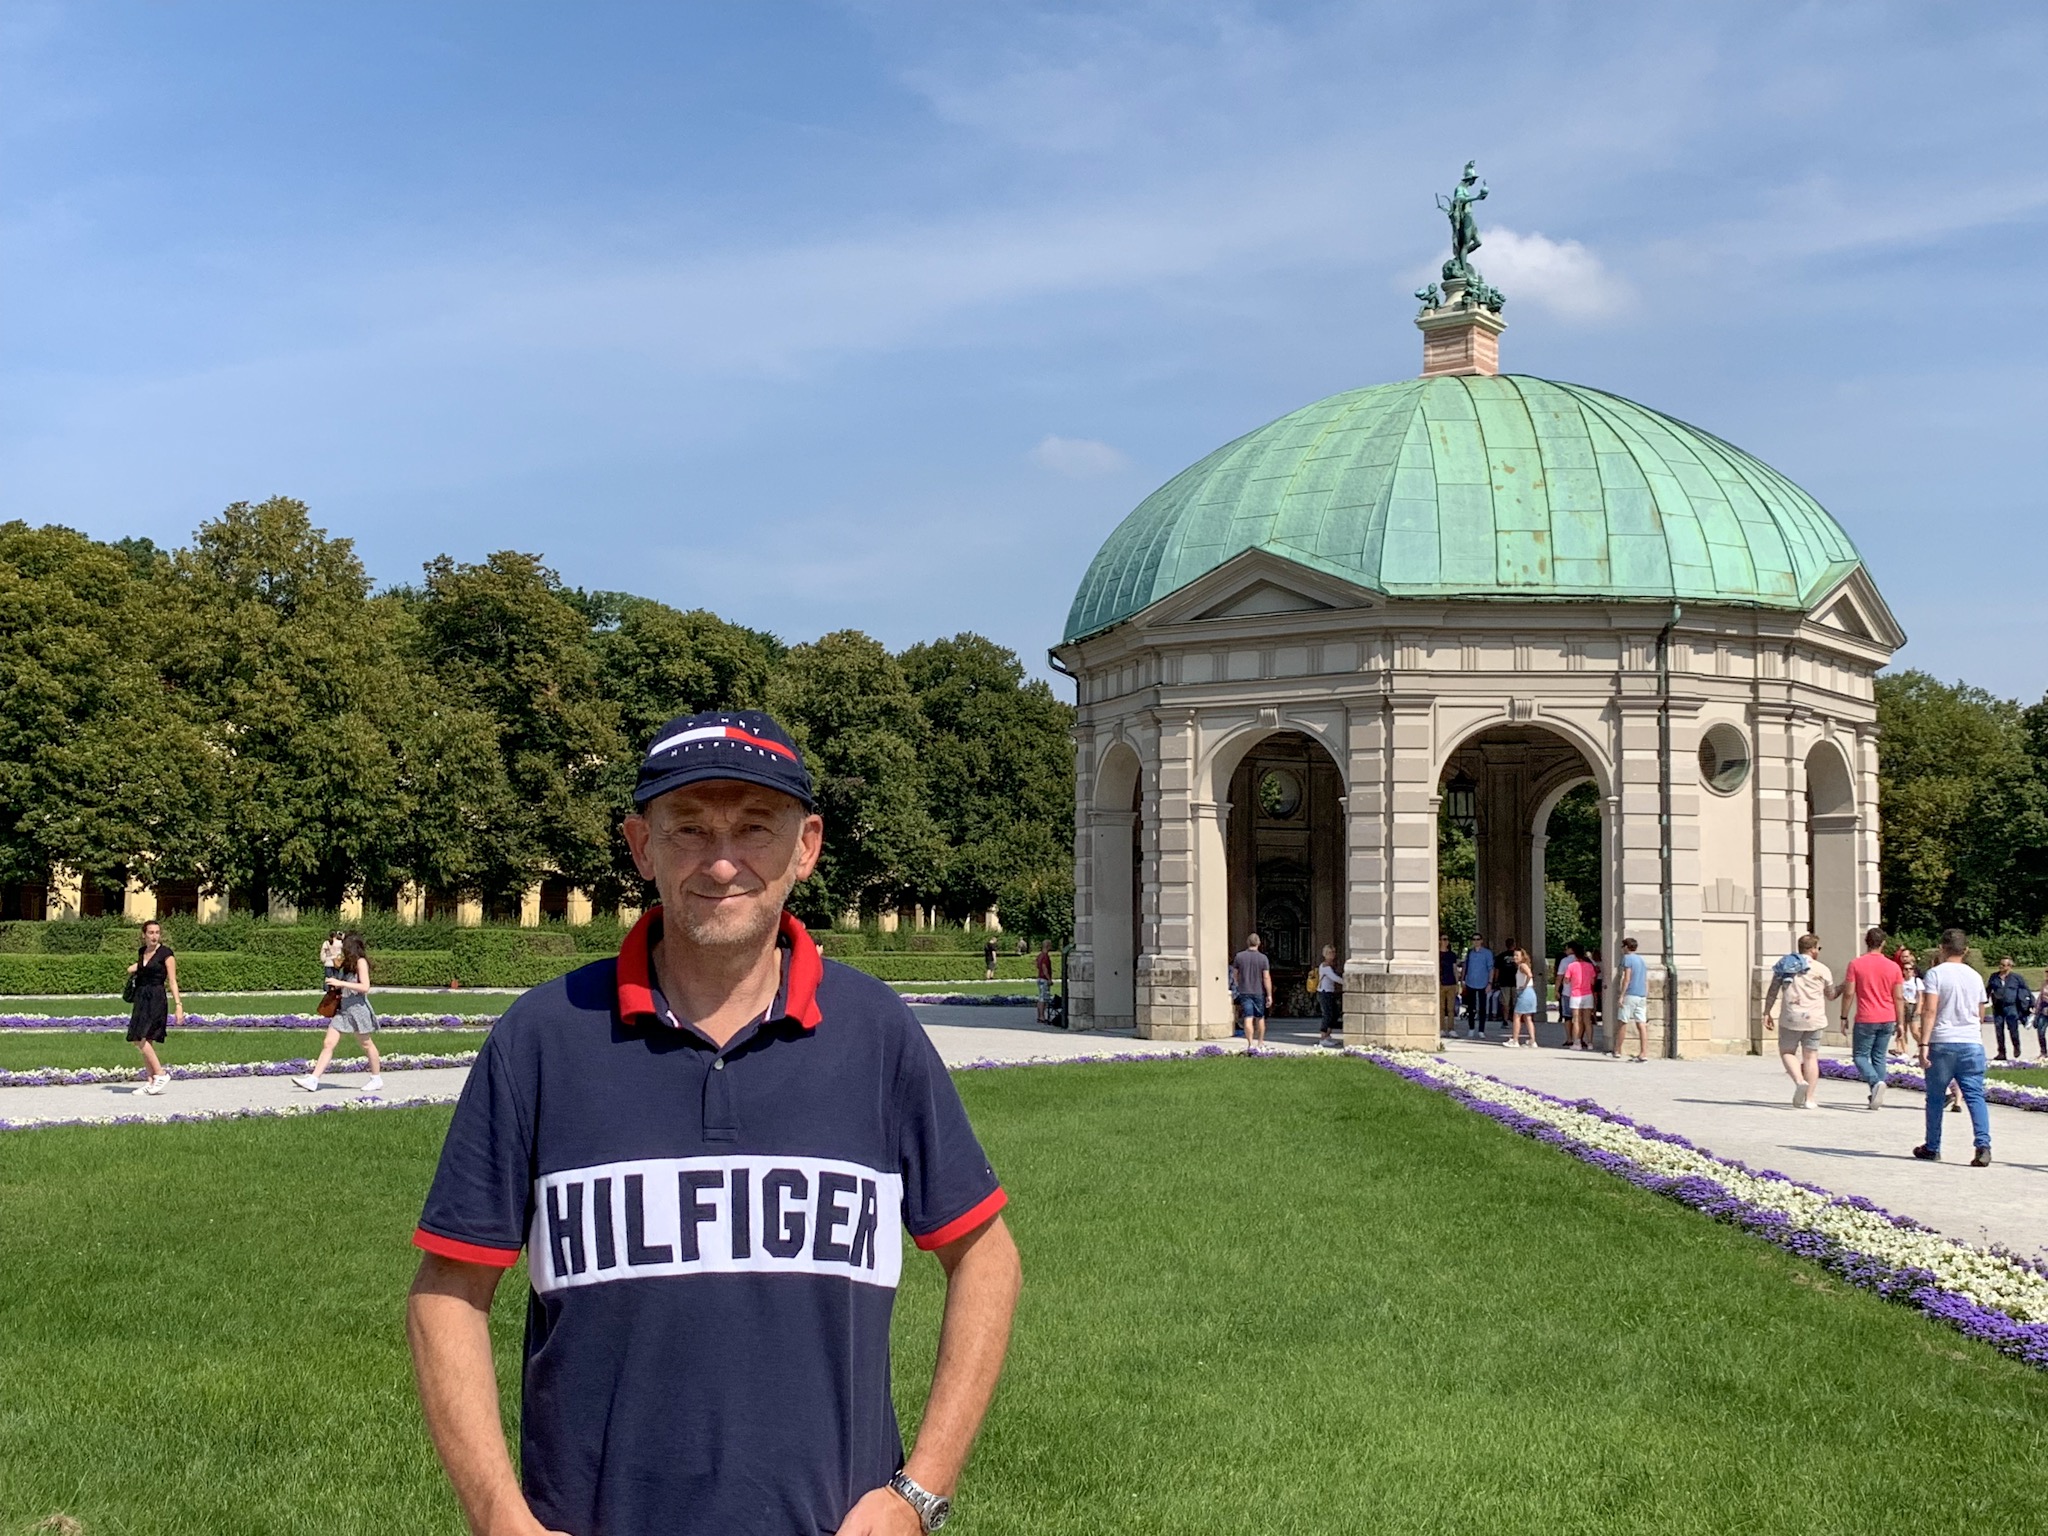 21 Reasons to love Munich: the majestic Hofgarten